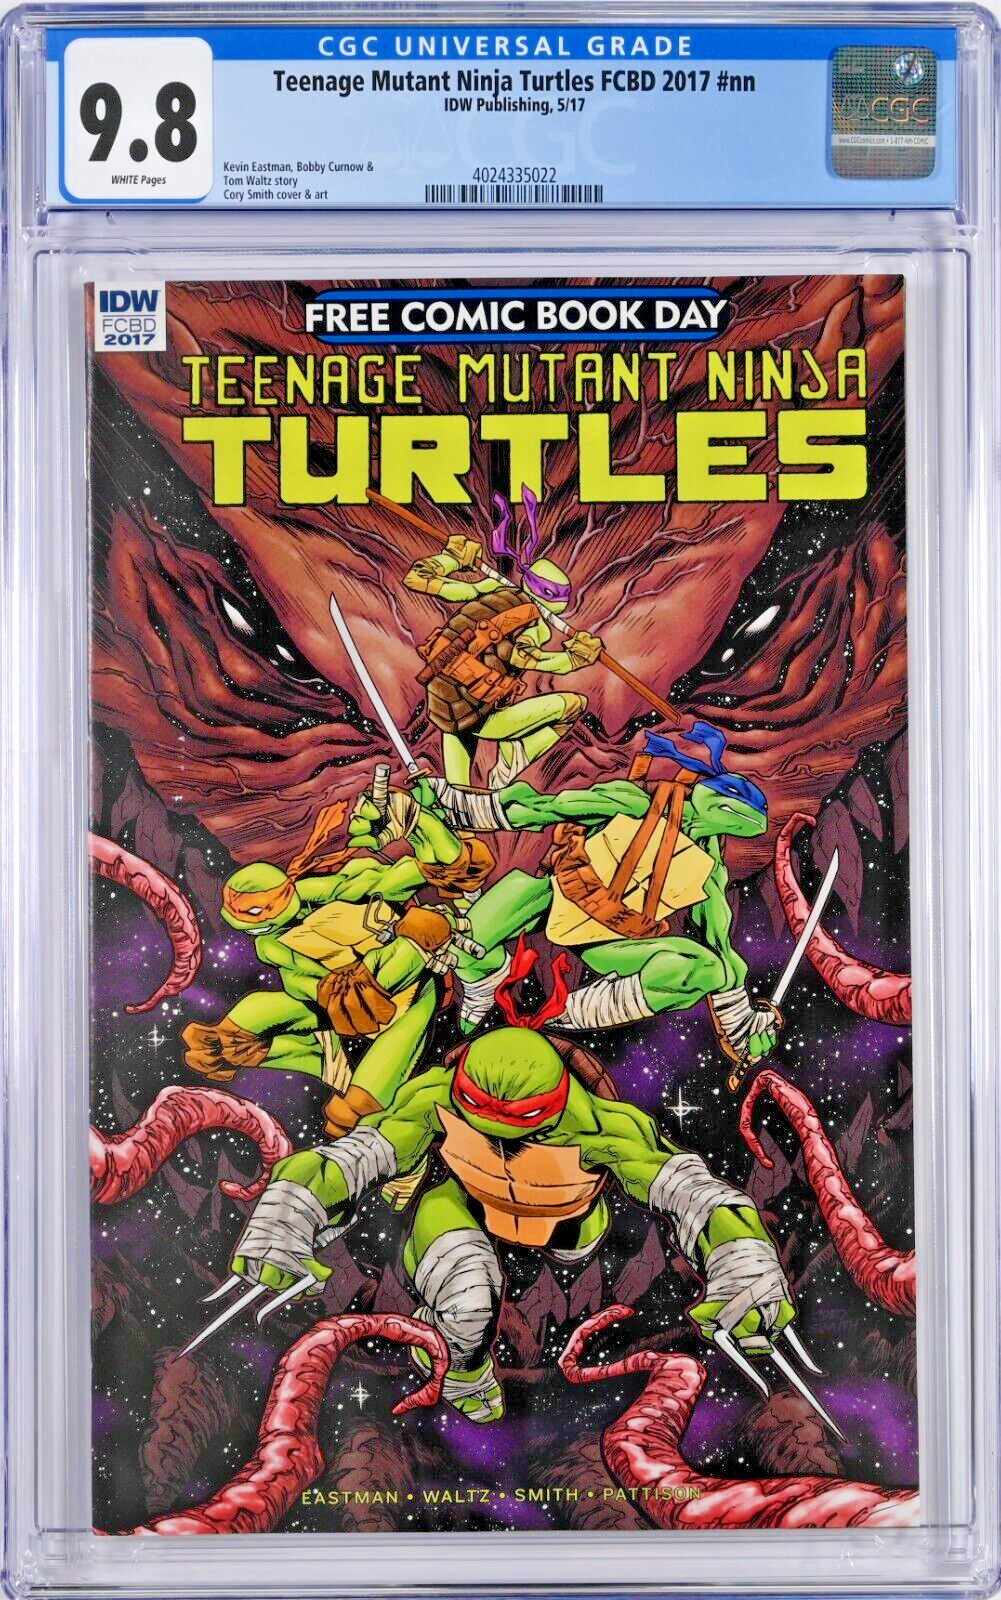 Teenage Mutant Ninja Turtles FCBD 2017 CGC 9.8 (May 2017, IDW) Kevin Eastman